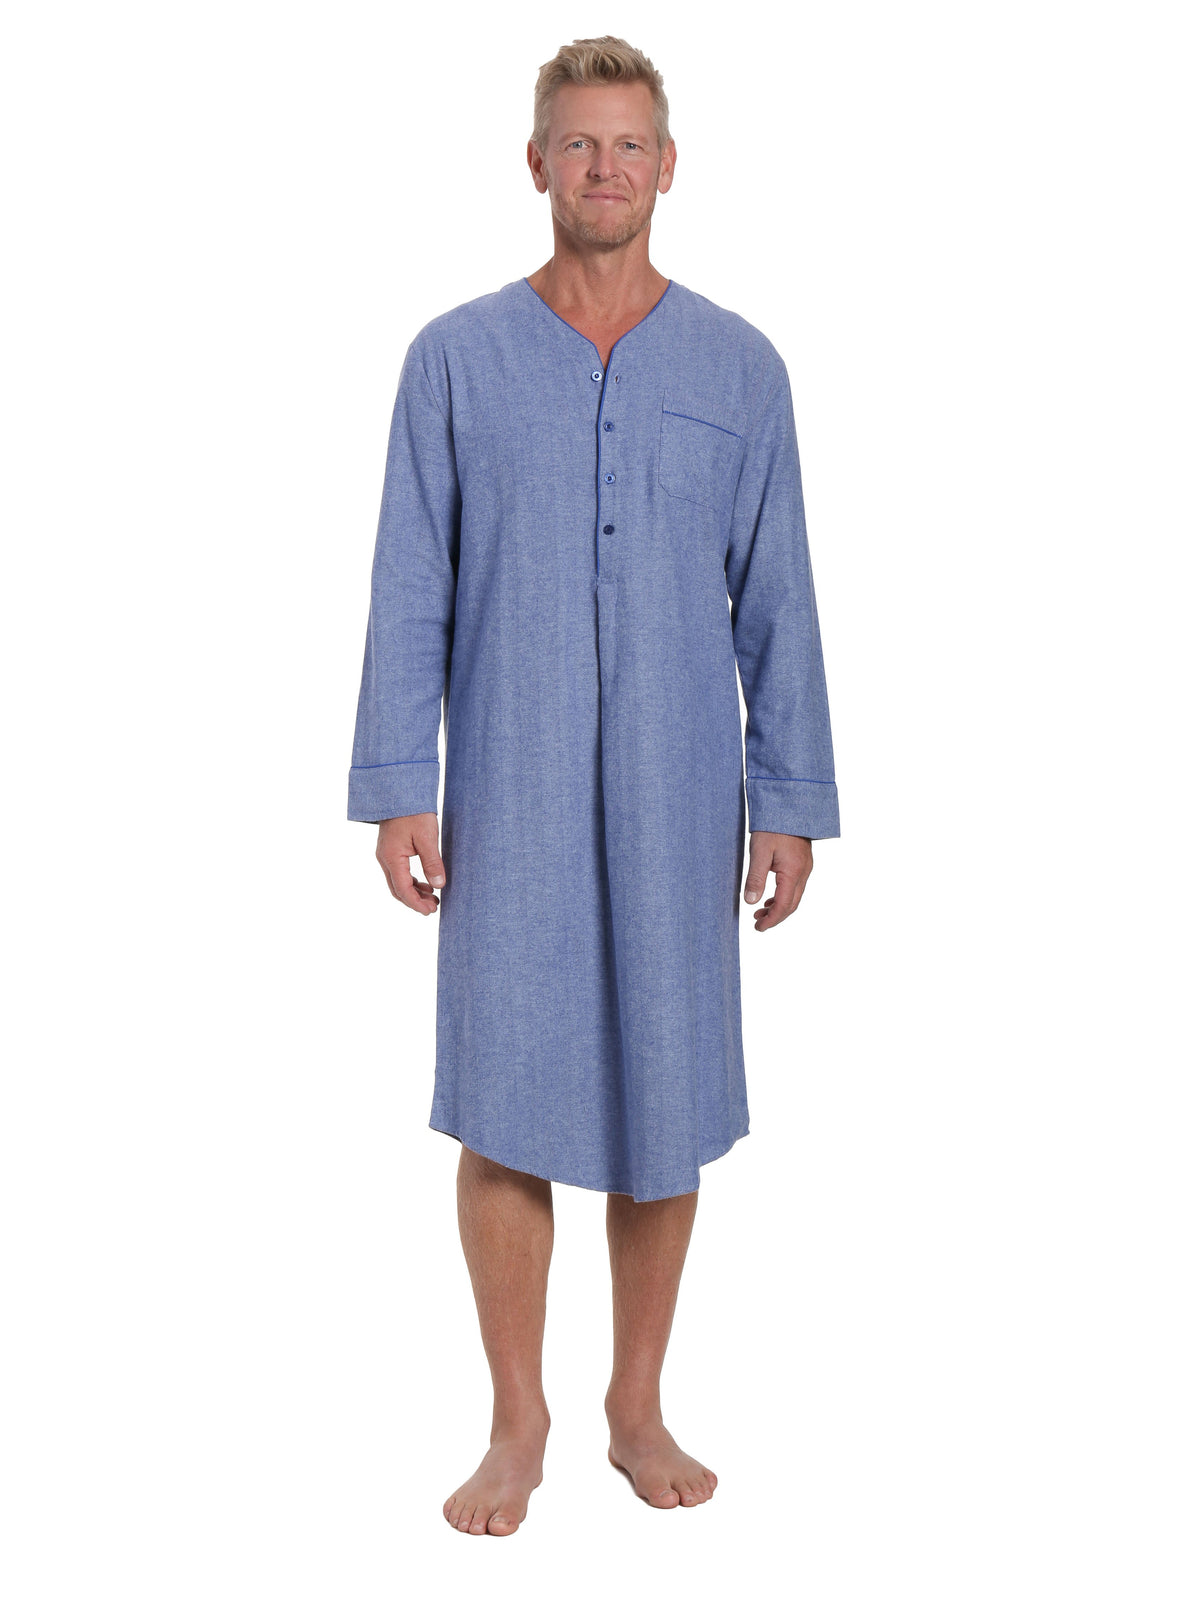 Mens 100% Cotton Flannel Nightshirt - Herringbone Blue